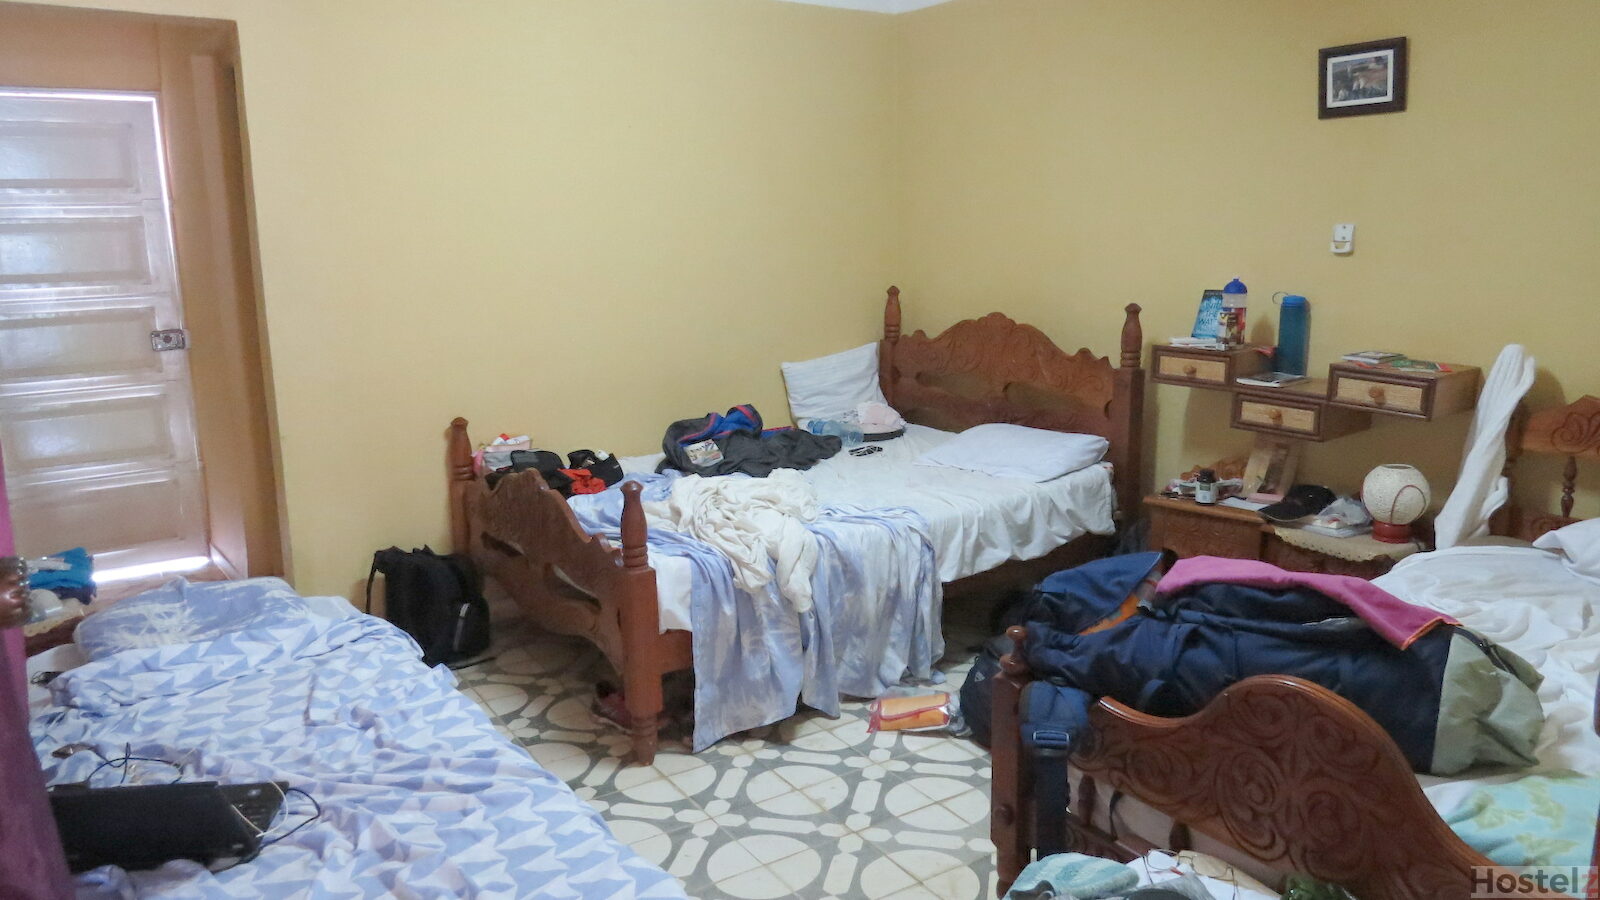 A Full dorm at # 166